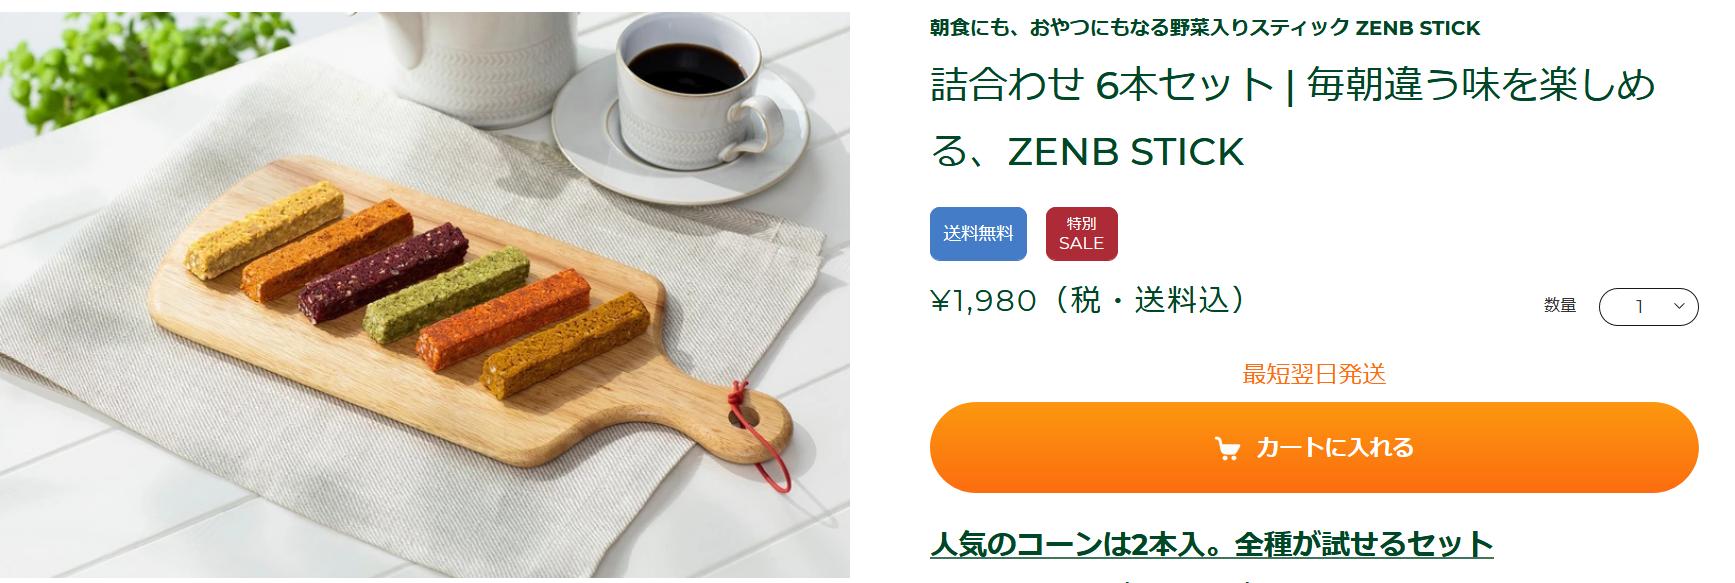 Screenshot_2020-08-29 詰合わせ 6本セット 毎朝違う味を楽しめる、ZENB STICK